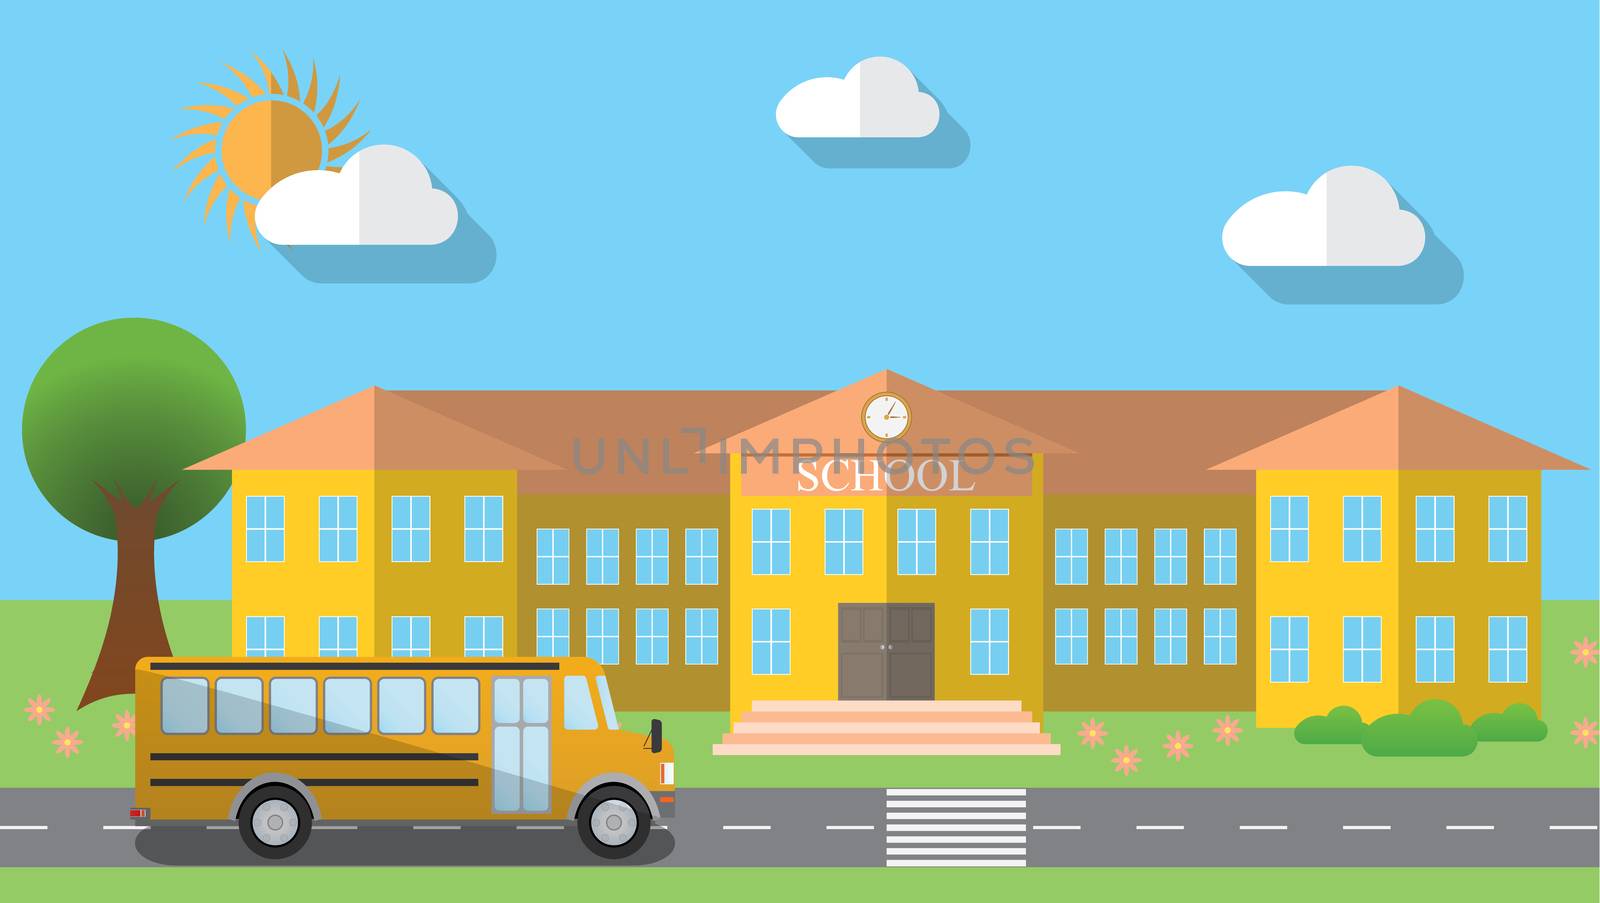 Flat design vector illustration of school building and parked school bus in flat design style, vector illustration by Lemon_workshop